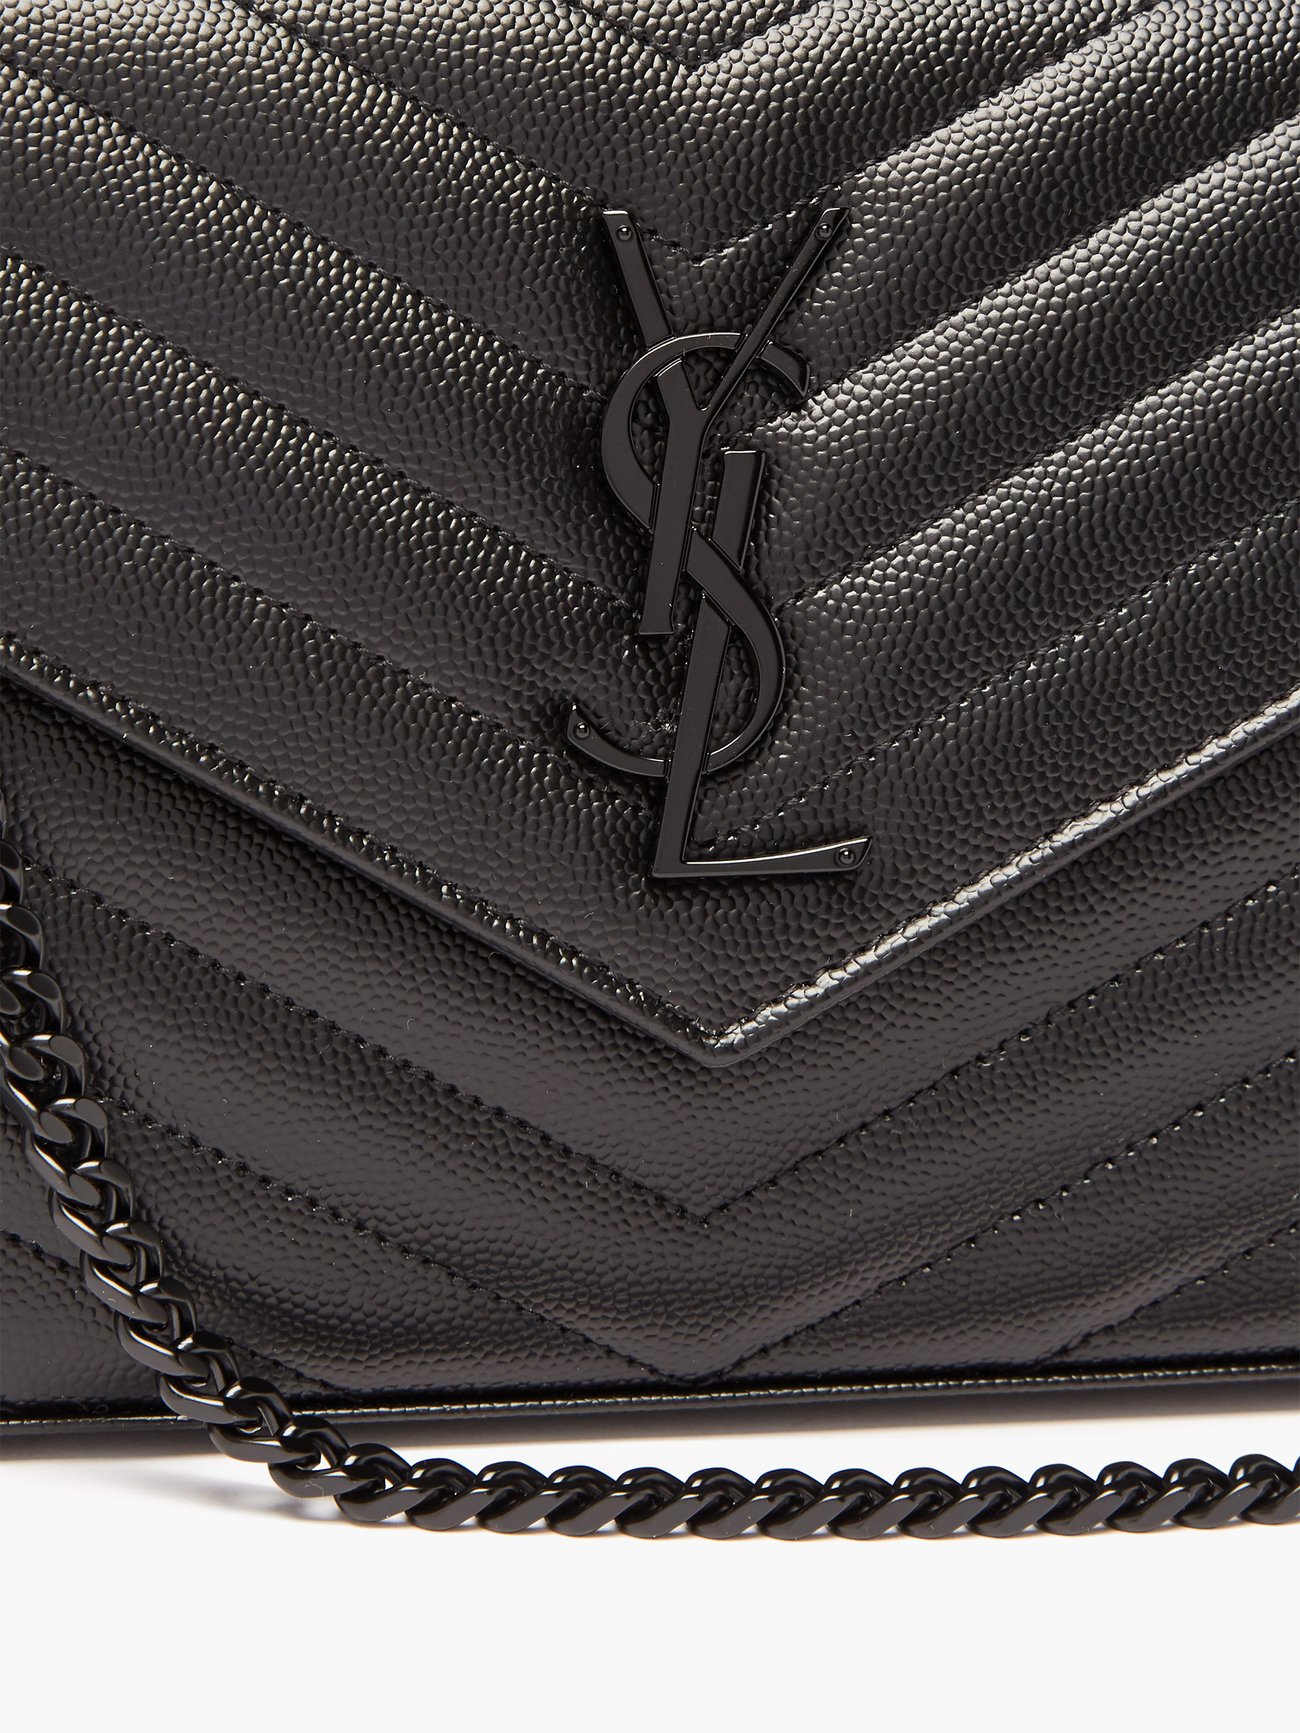 Saint Laurent Womens Black Monogram Quilted Leather Envelope Clutch